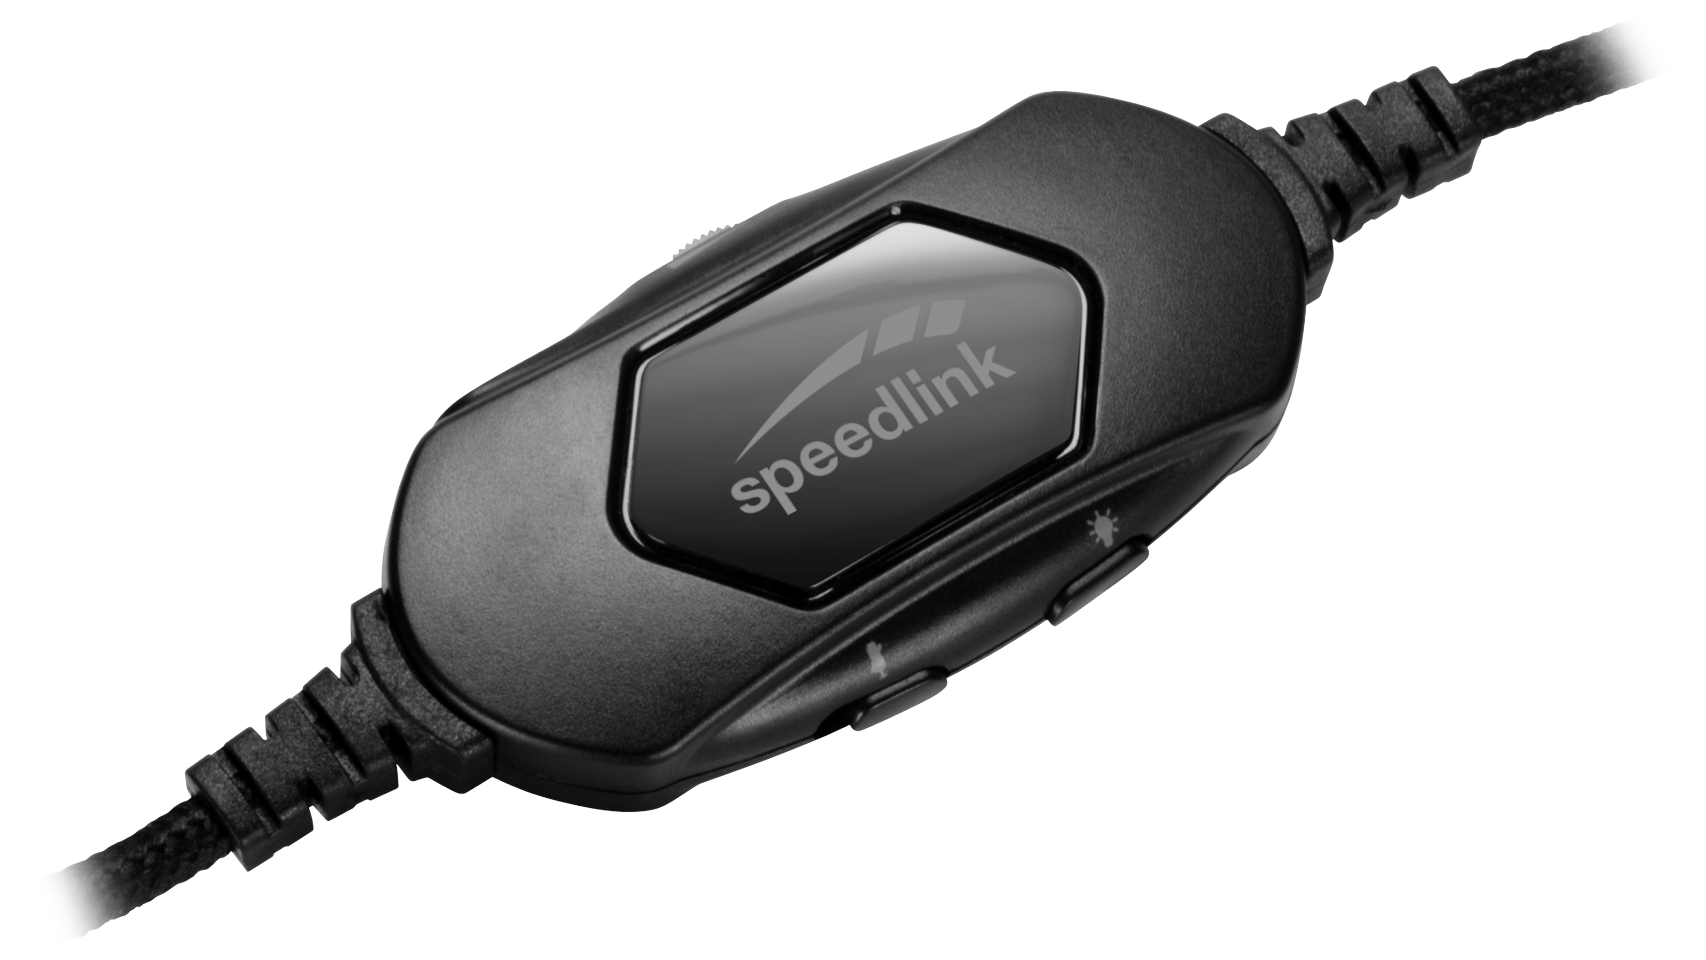 Speedlink - VIRTAS Illuminated 7.1 Gaming Headset, black